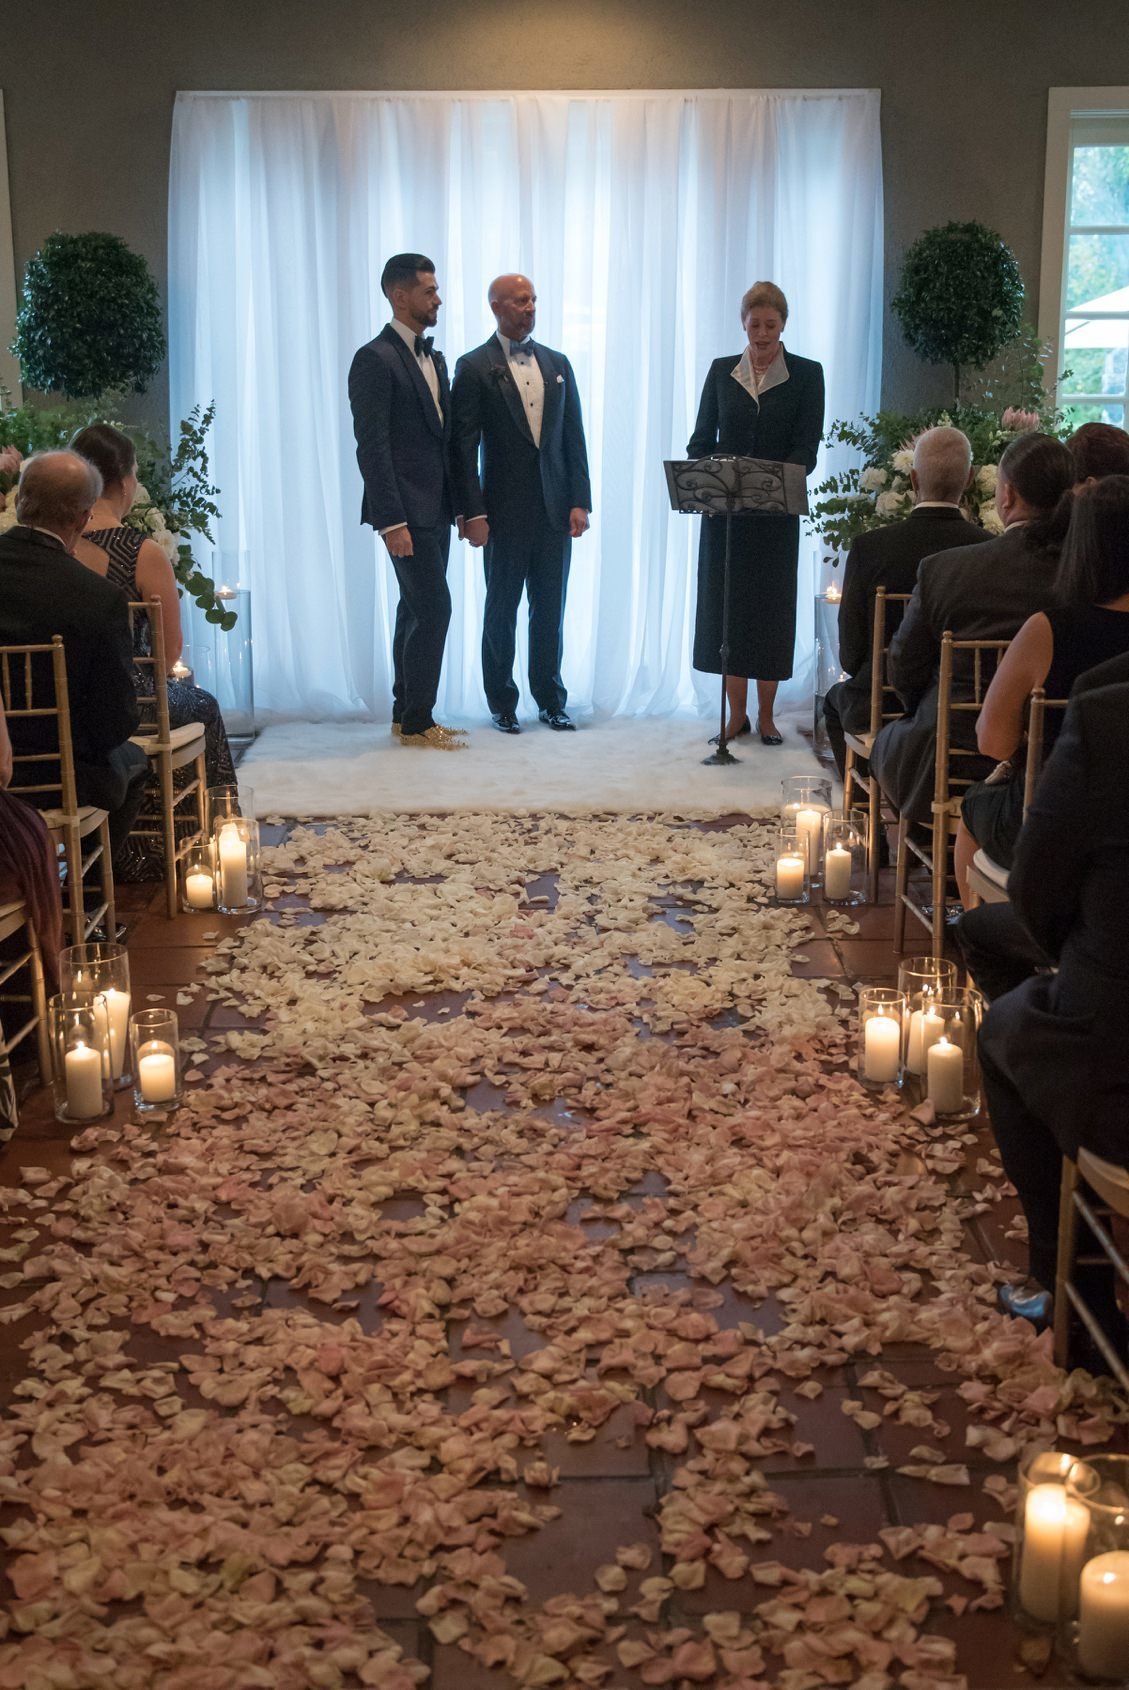 Brendan & Ryan's wedding ceremony inside Lord Thompson Manor